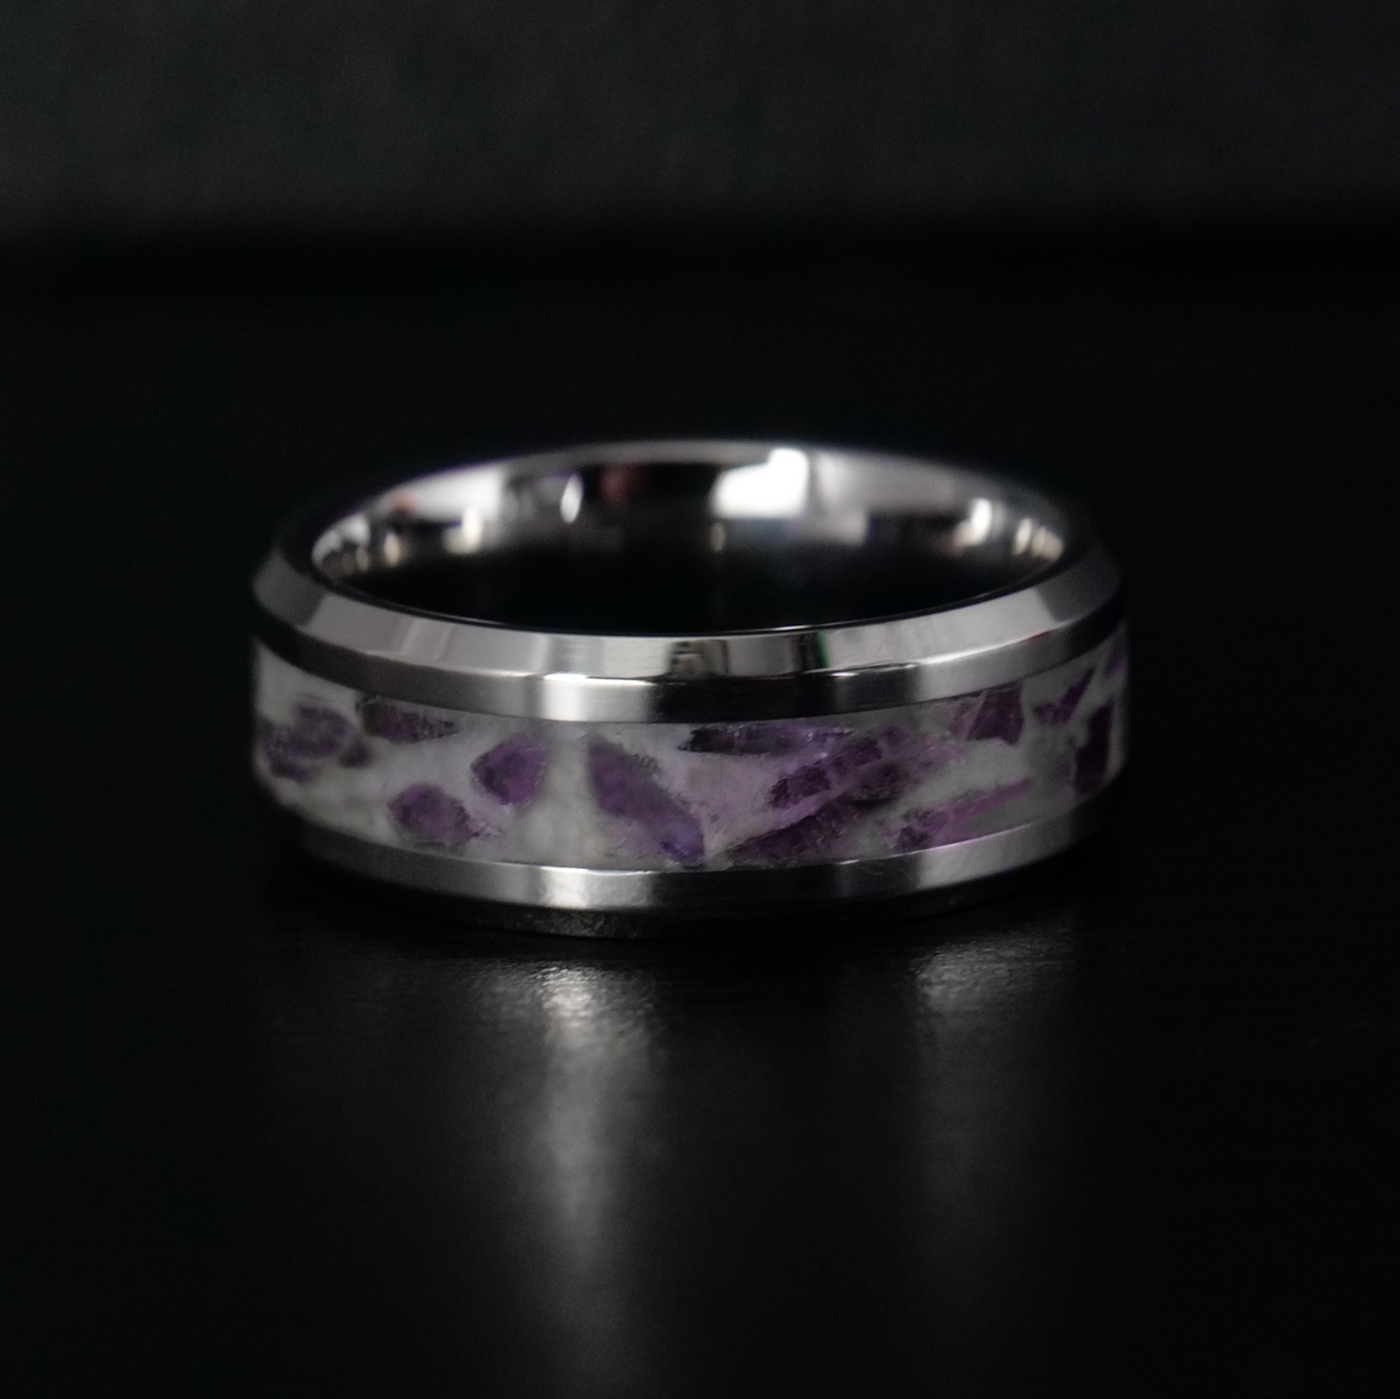 February Birthstone Ring | Amethyst Glowstone Ring - Patrick Adair Designs